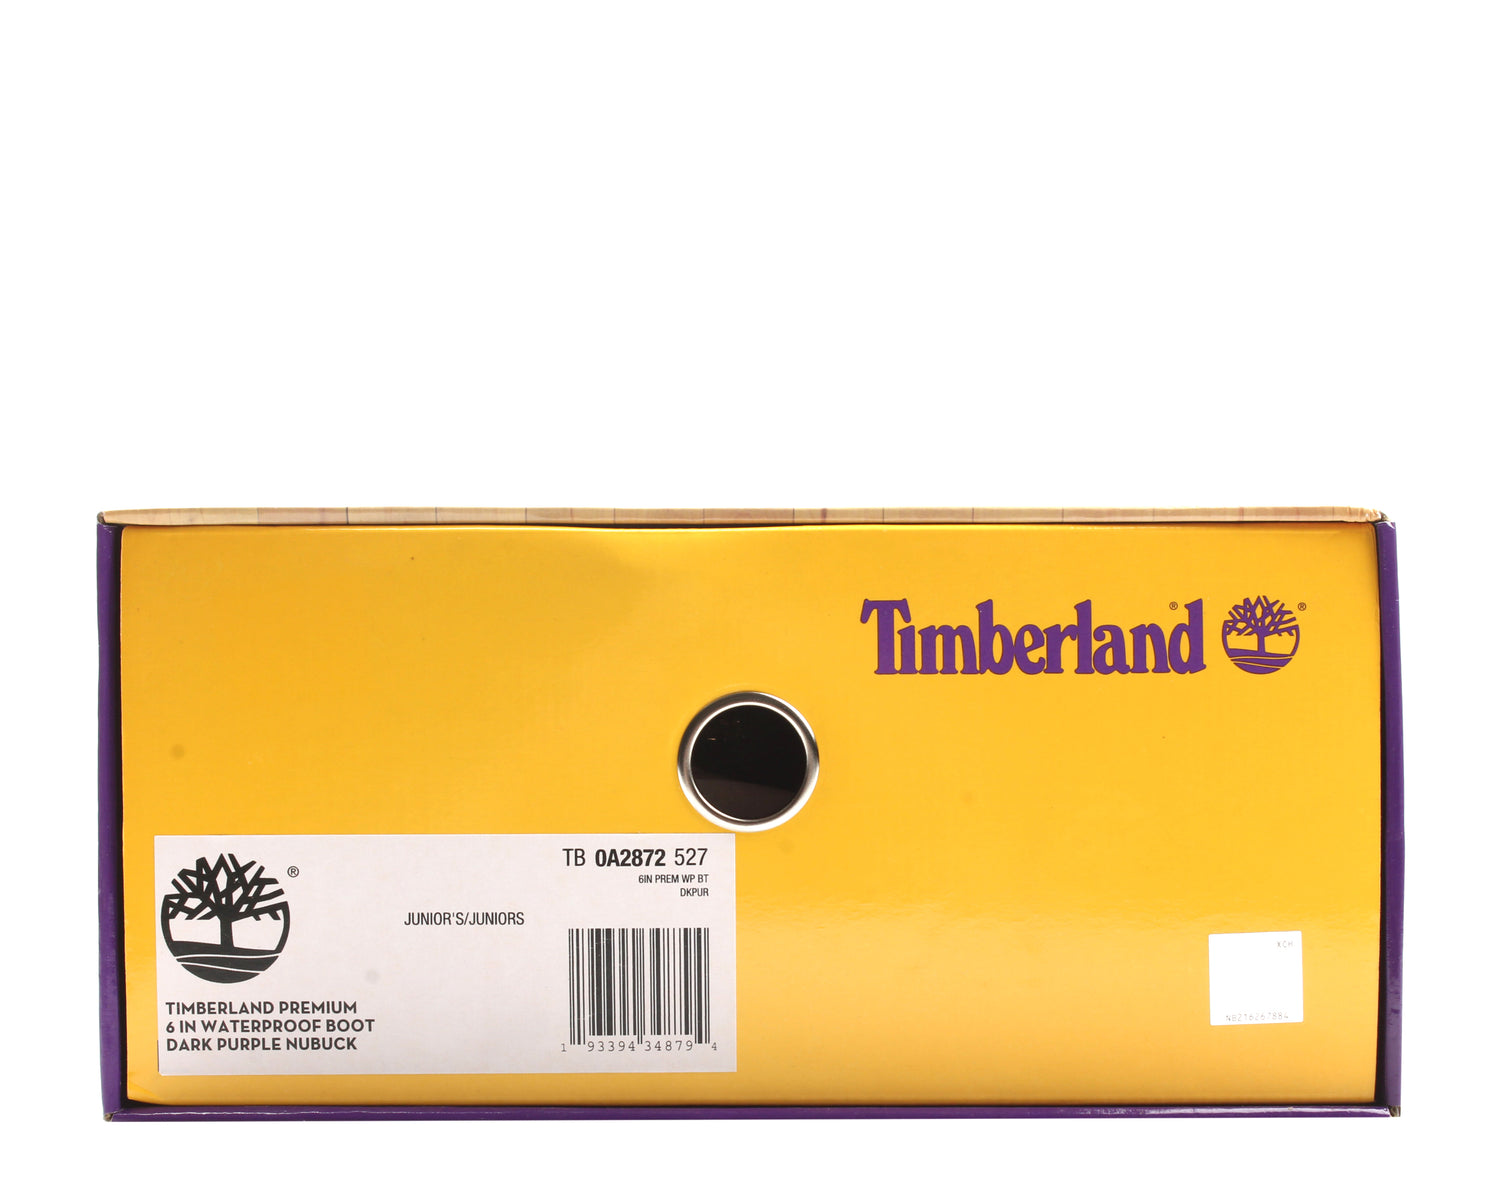 Timberland x NBA LA Lakers 6-Inch Premium Waterproof Junior Big Kids Boots